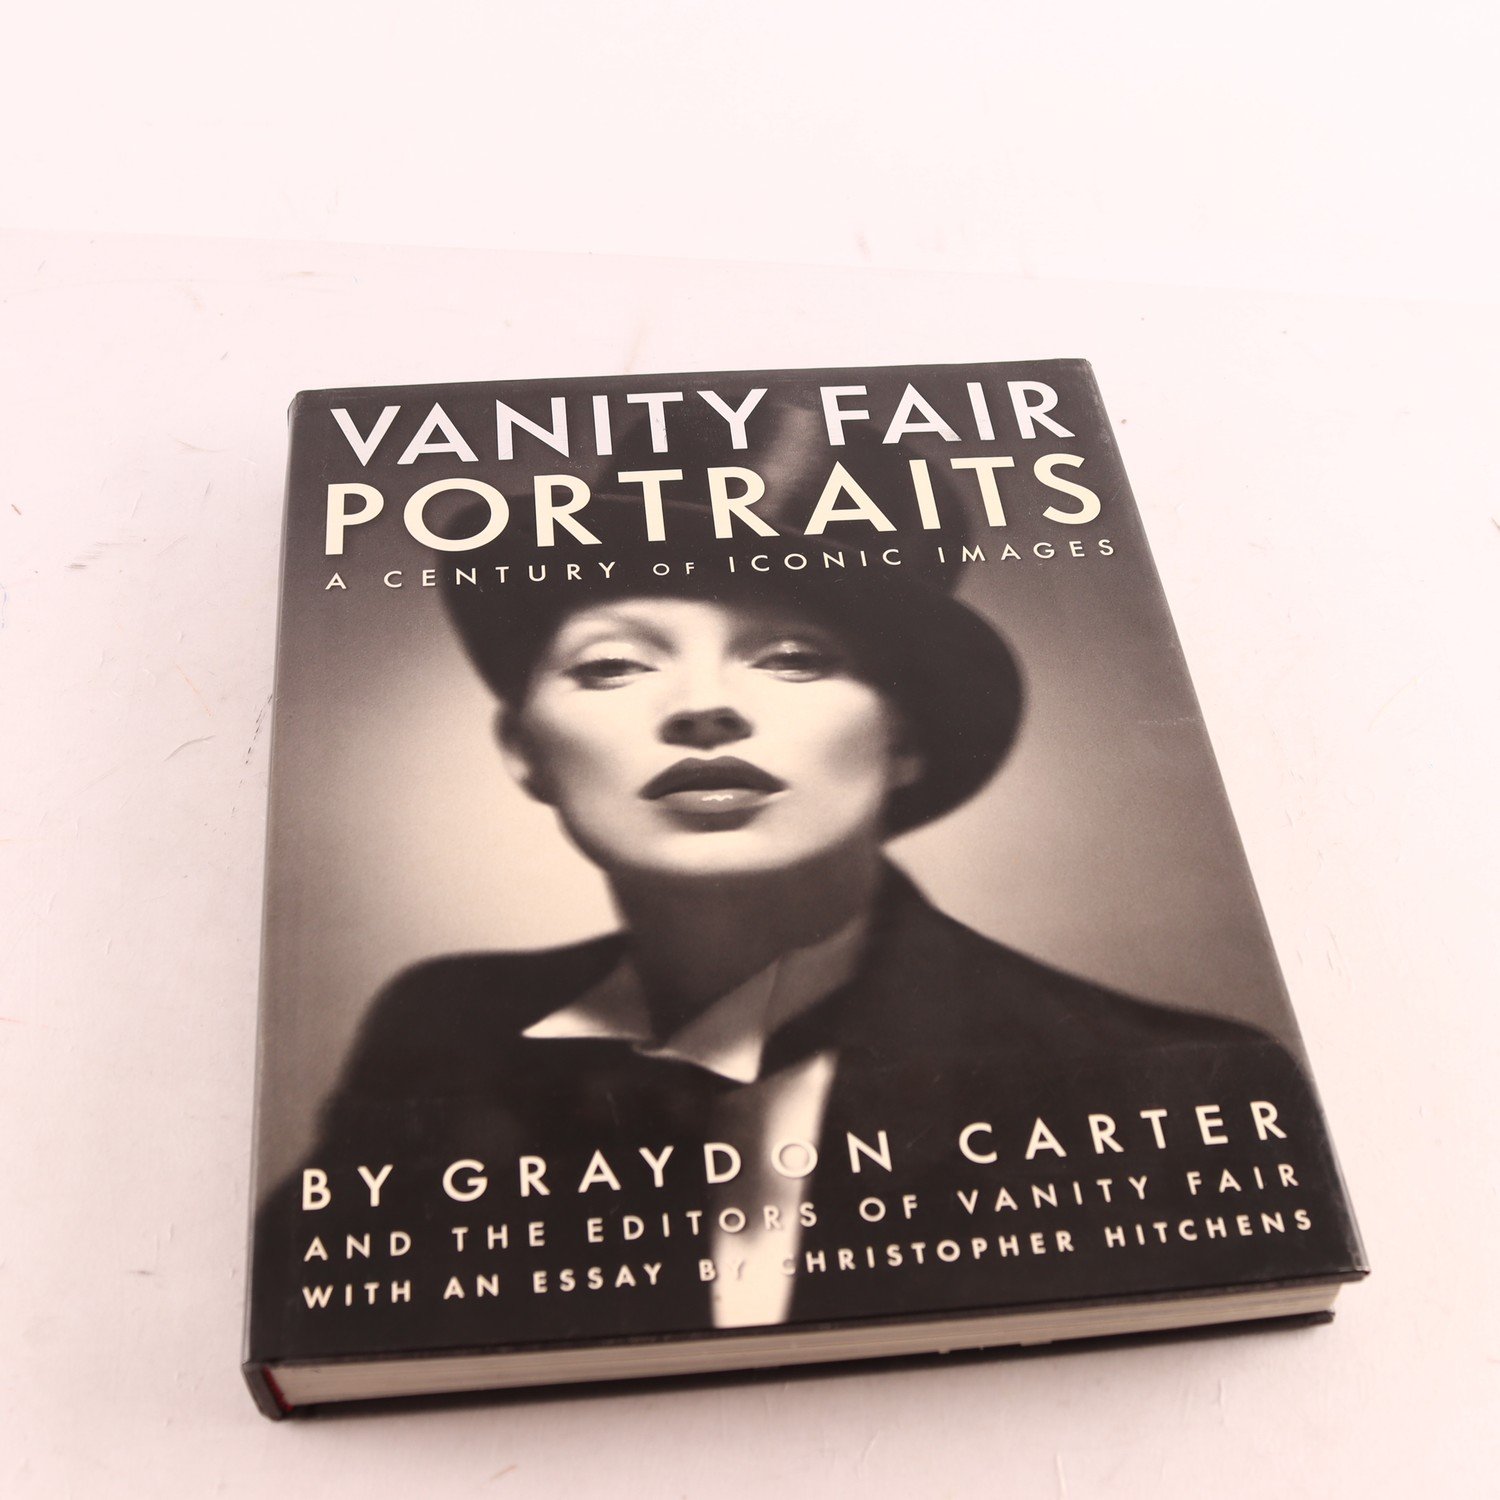 Vanity Fair Portraits, A century of iconic images. Samfraktas ej.